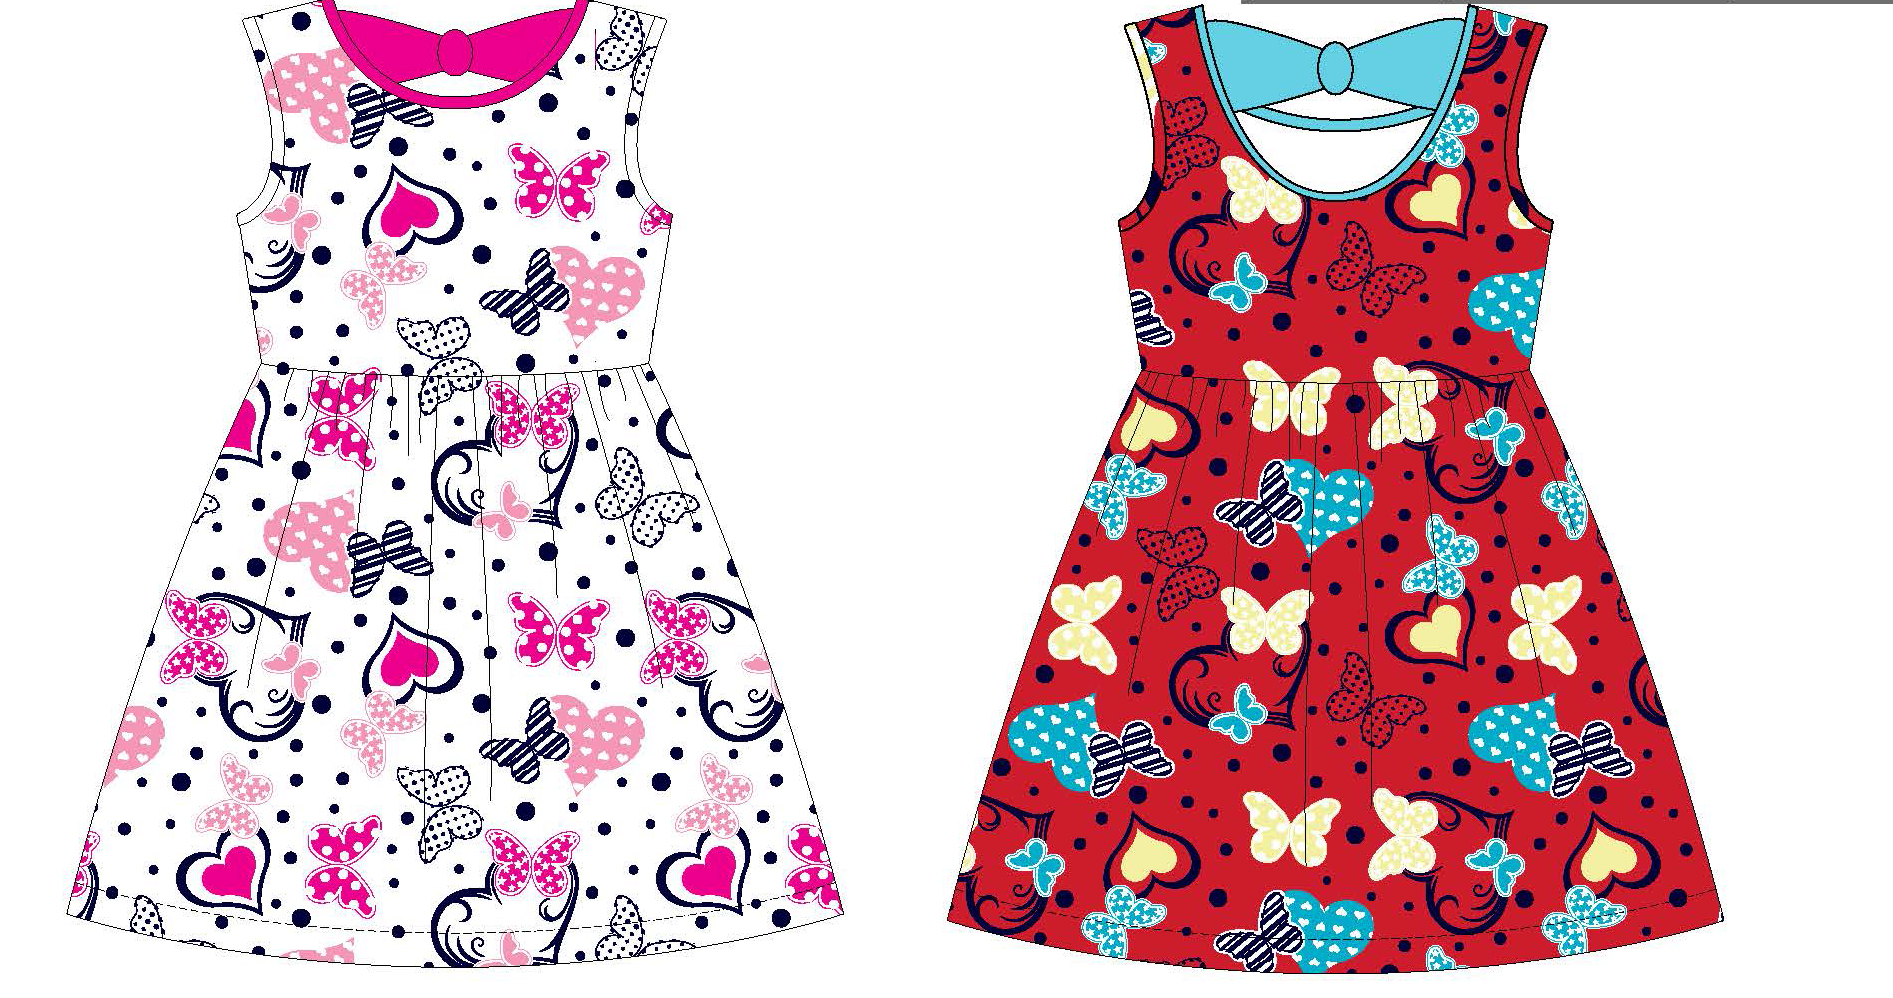 Baby Girl's Sleeveless Knit Swing DRESS w/ Butterfly & Heart Print - Size 12M-24M